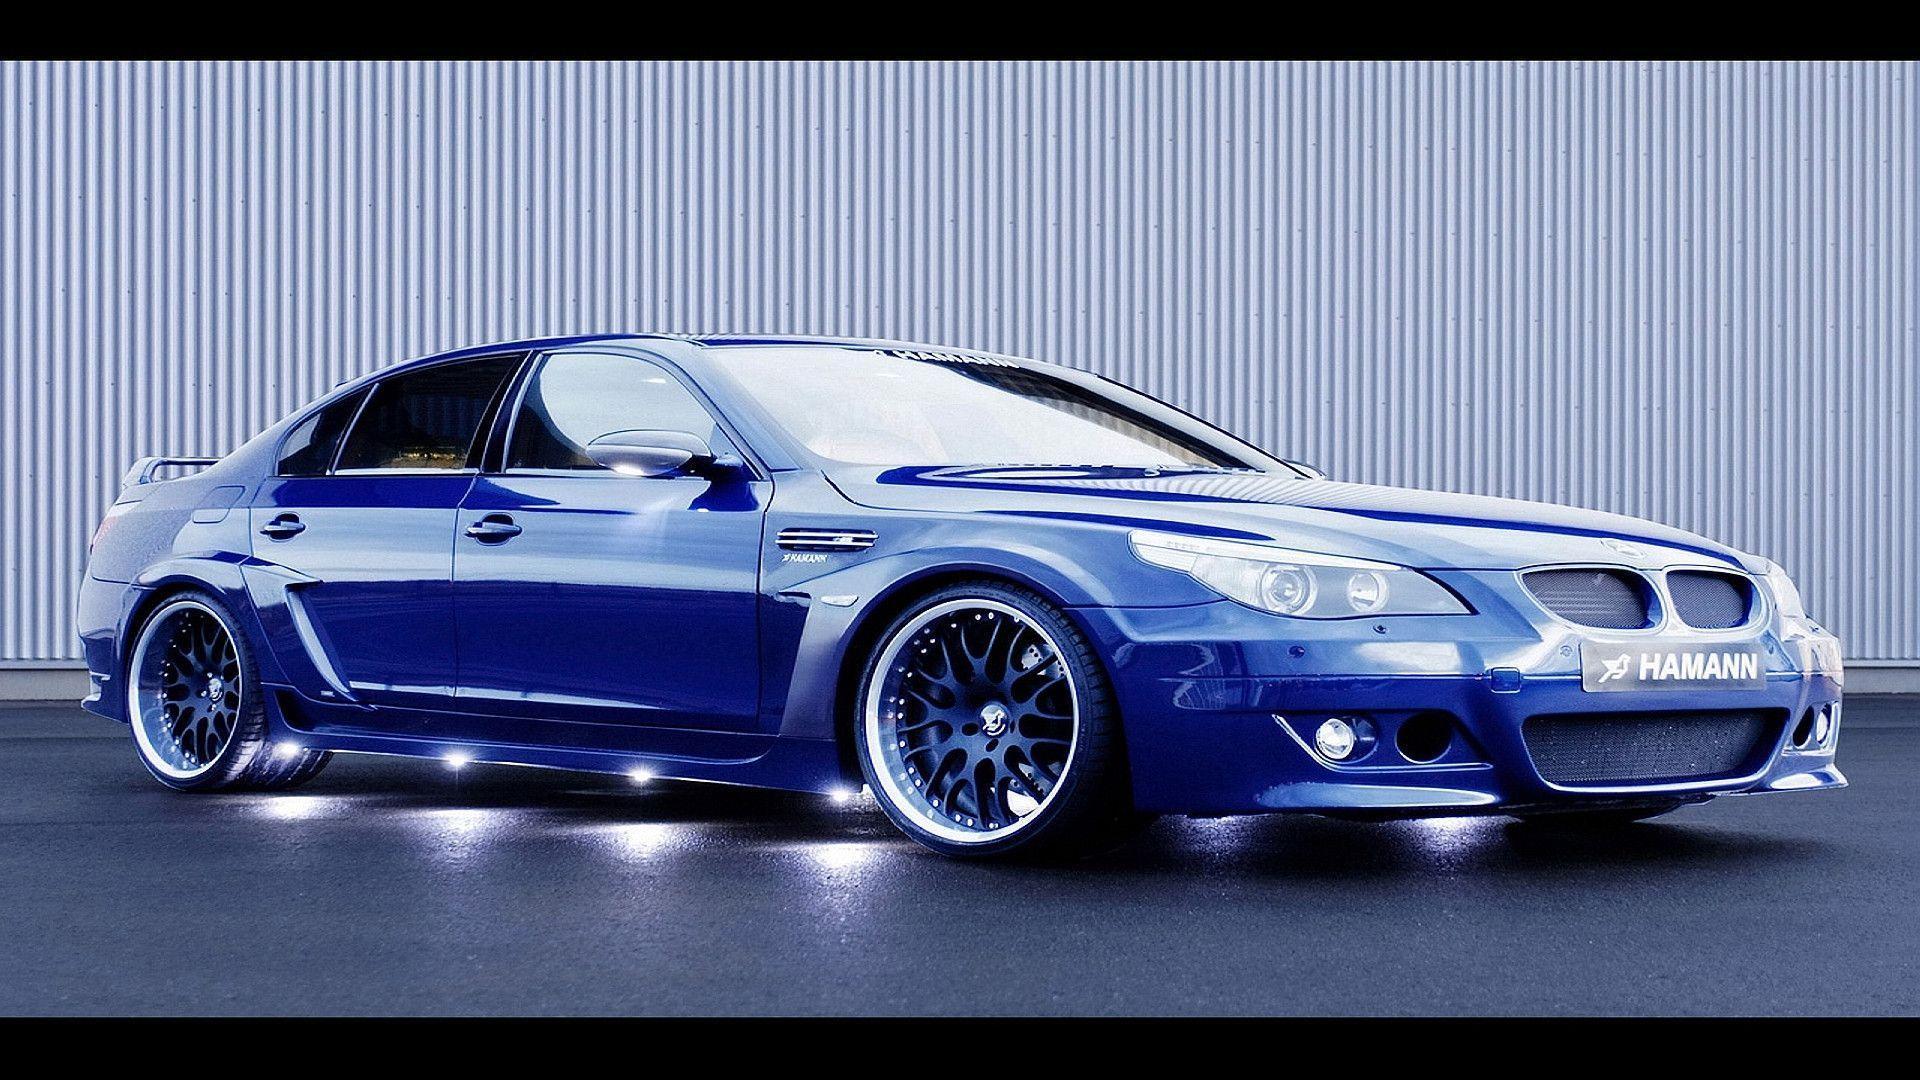 BMW Blue Car Wallpaper Background BMW Full Size Free Download 2612